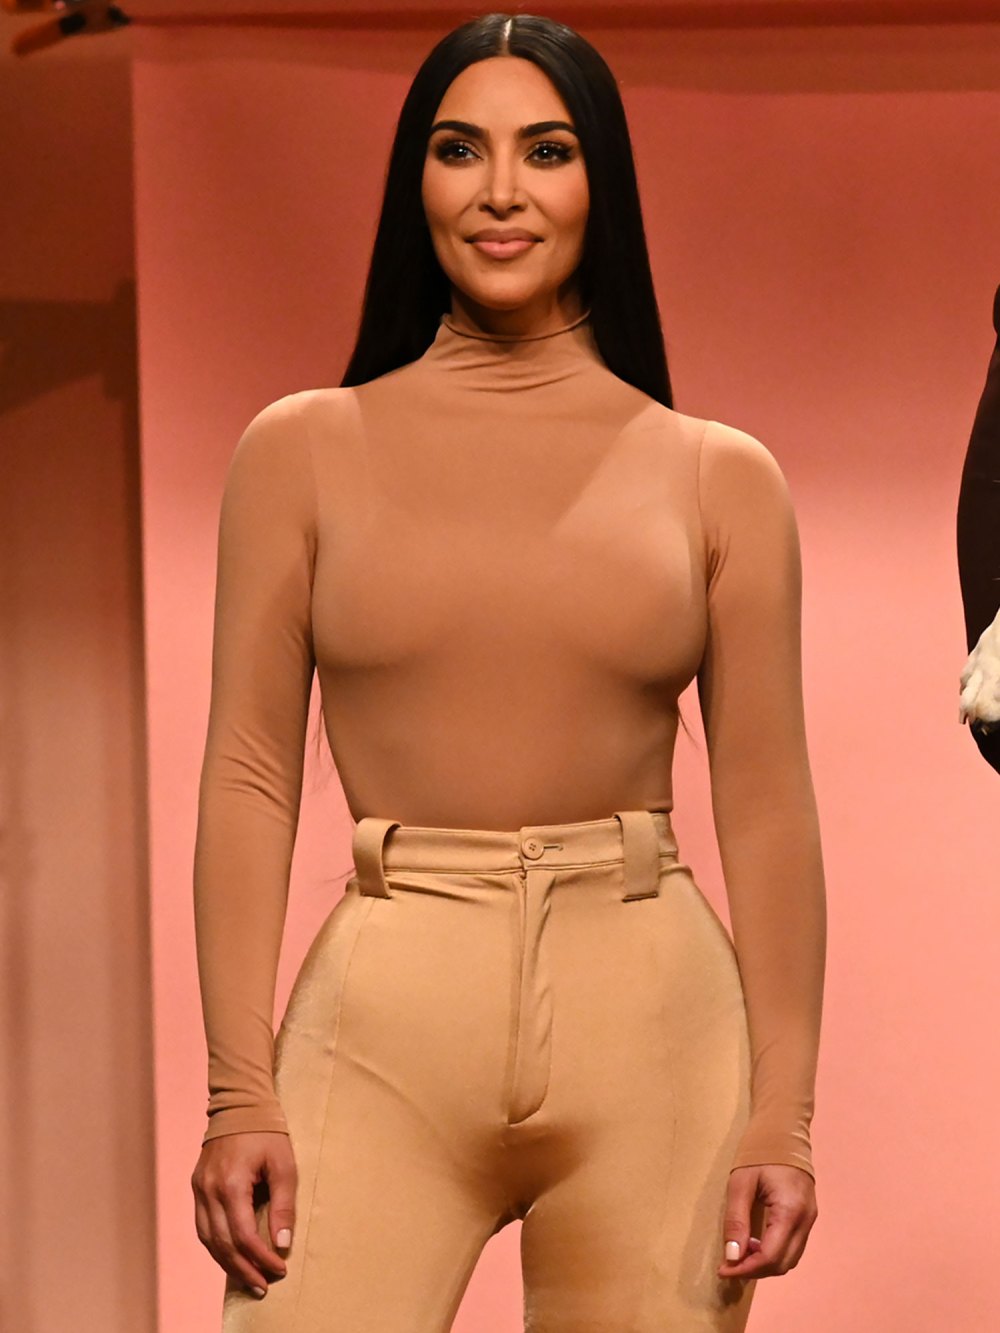 SNL' Shares Kim Kardashian Rushing to Change Between Skits Clip